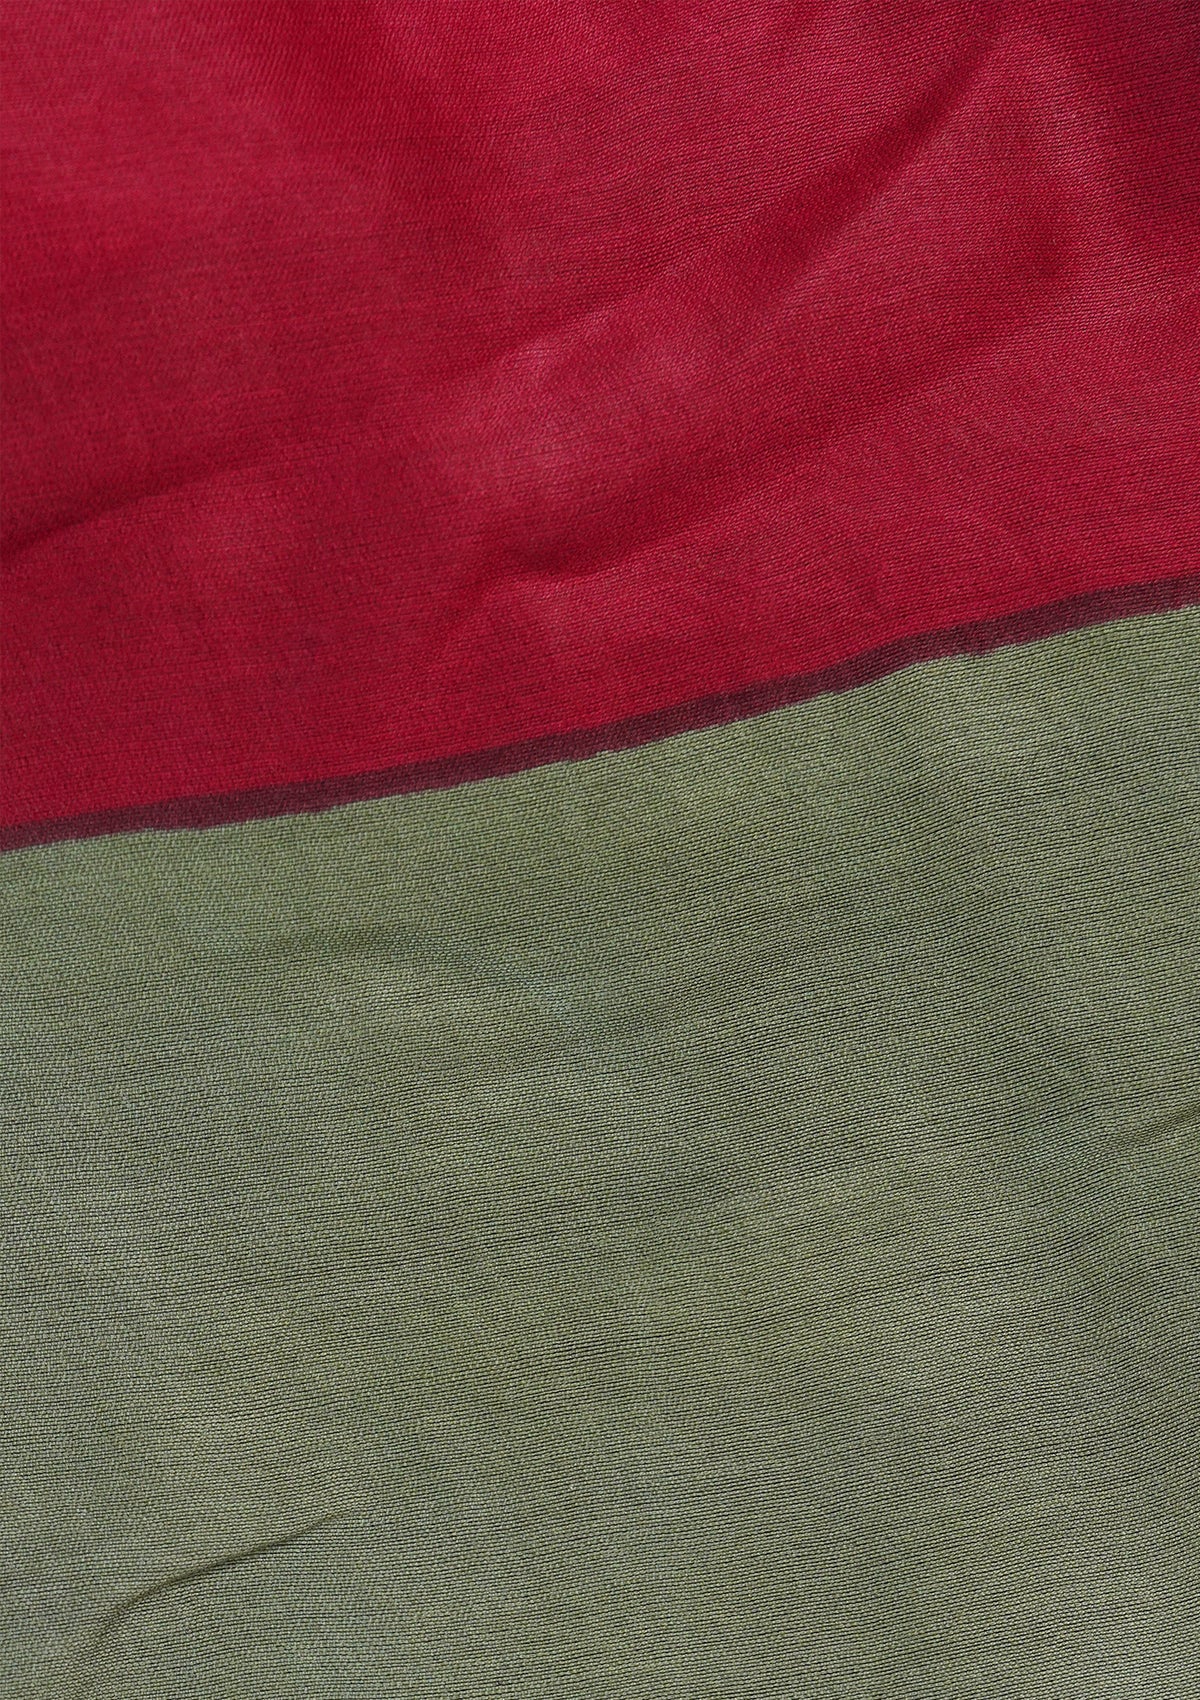 Handwoven Red Chanderi Silk Suit Piece